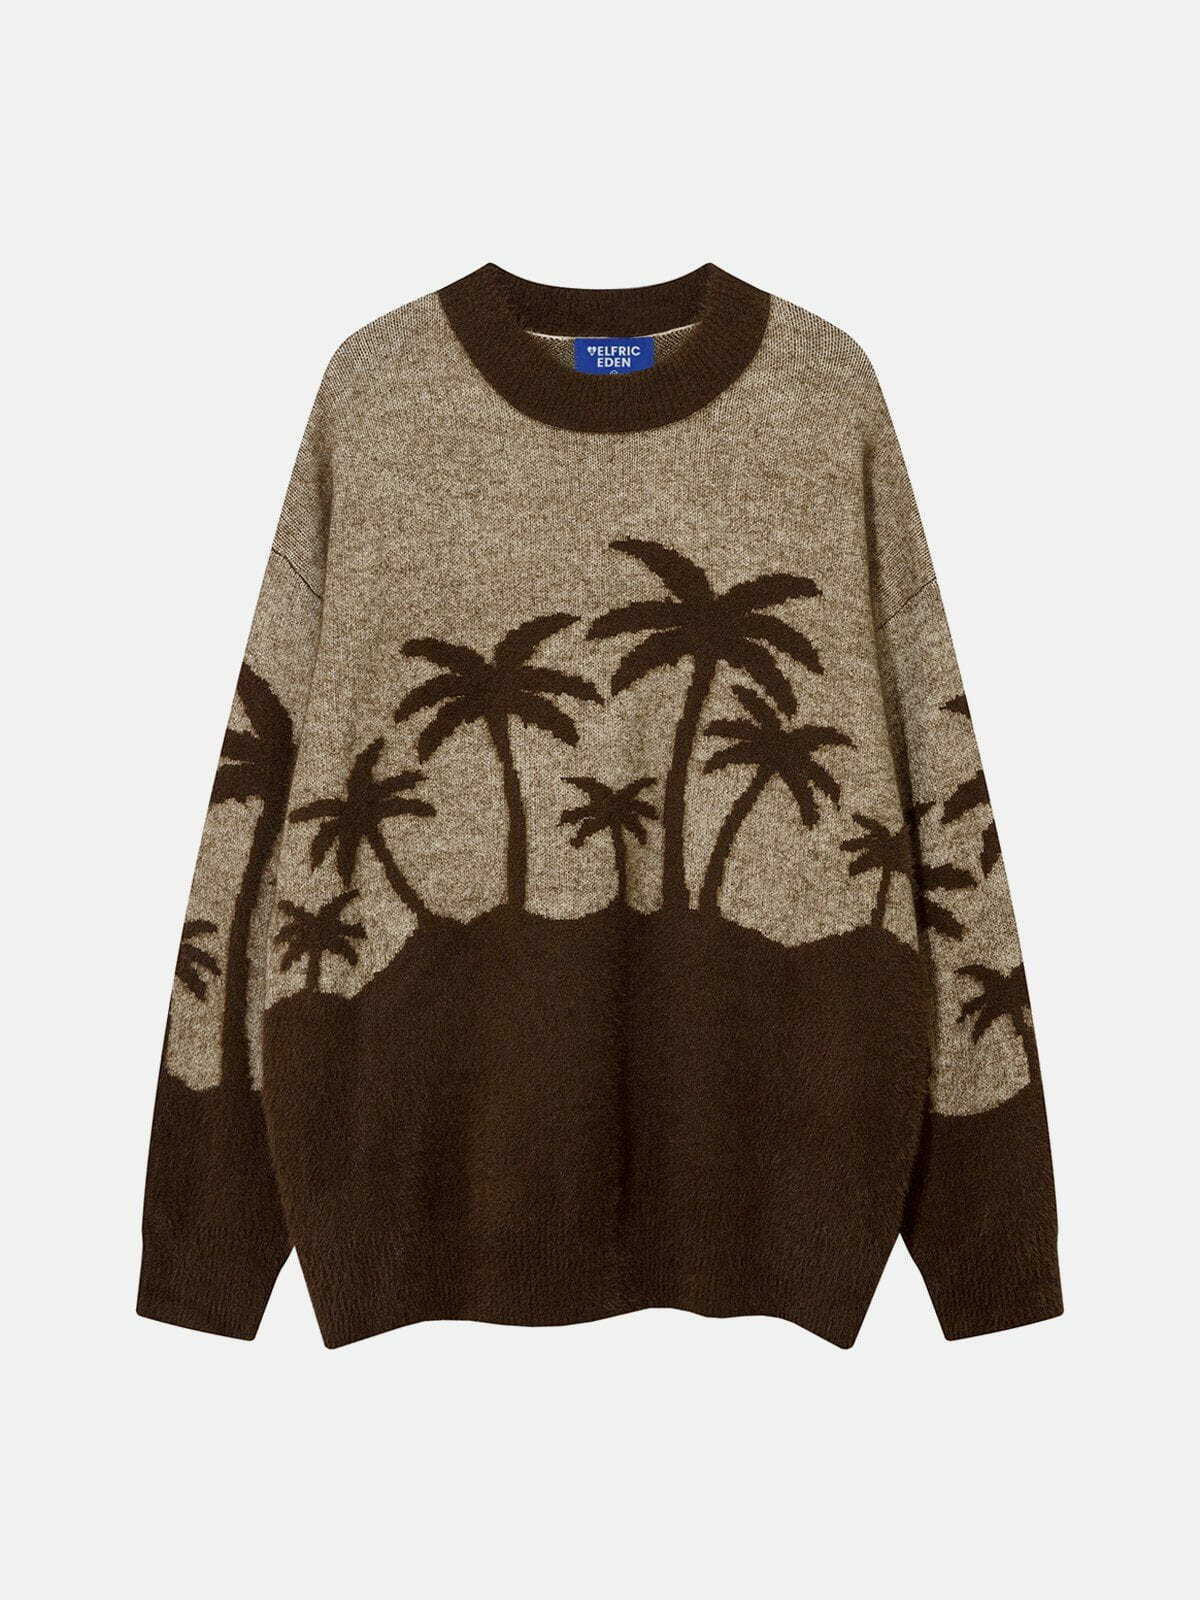 chic coconut jacquard sweater   urban & trendy knitwear 5672